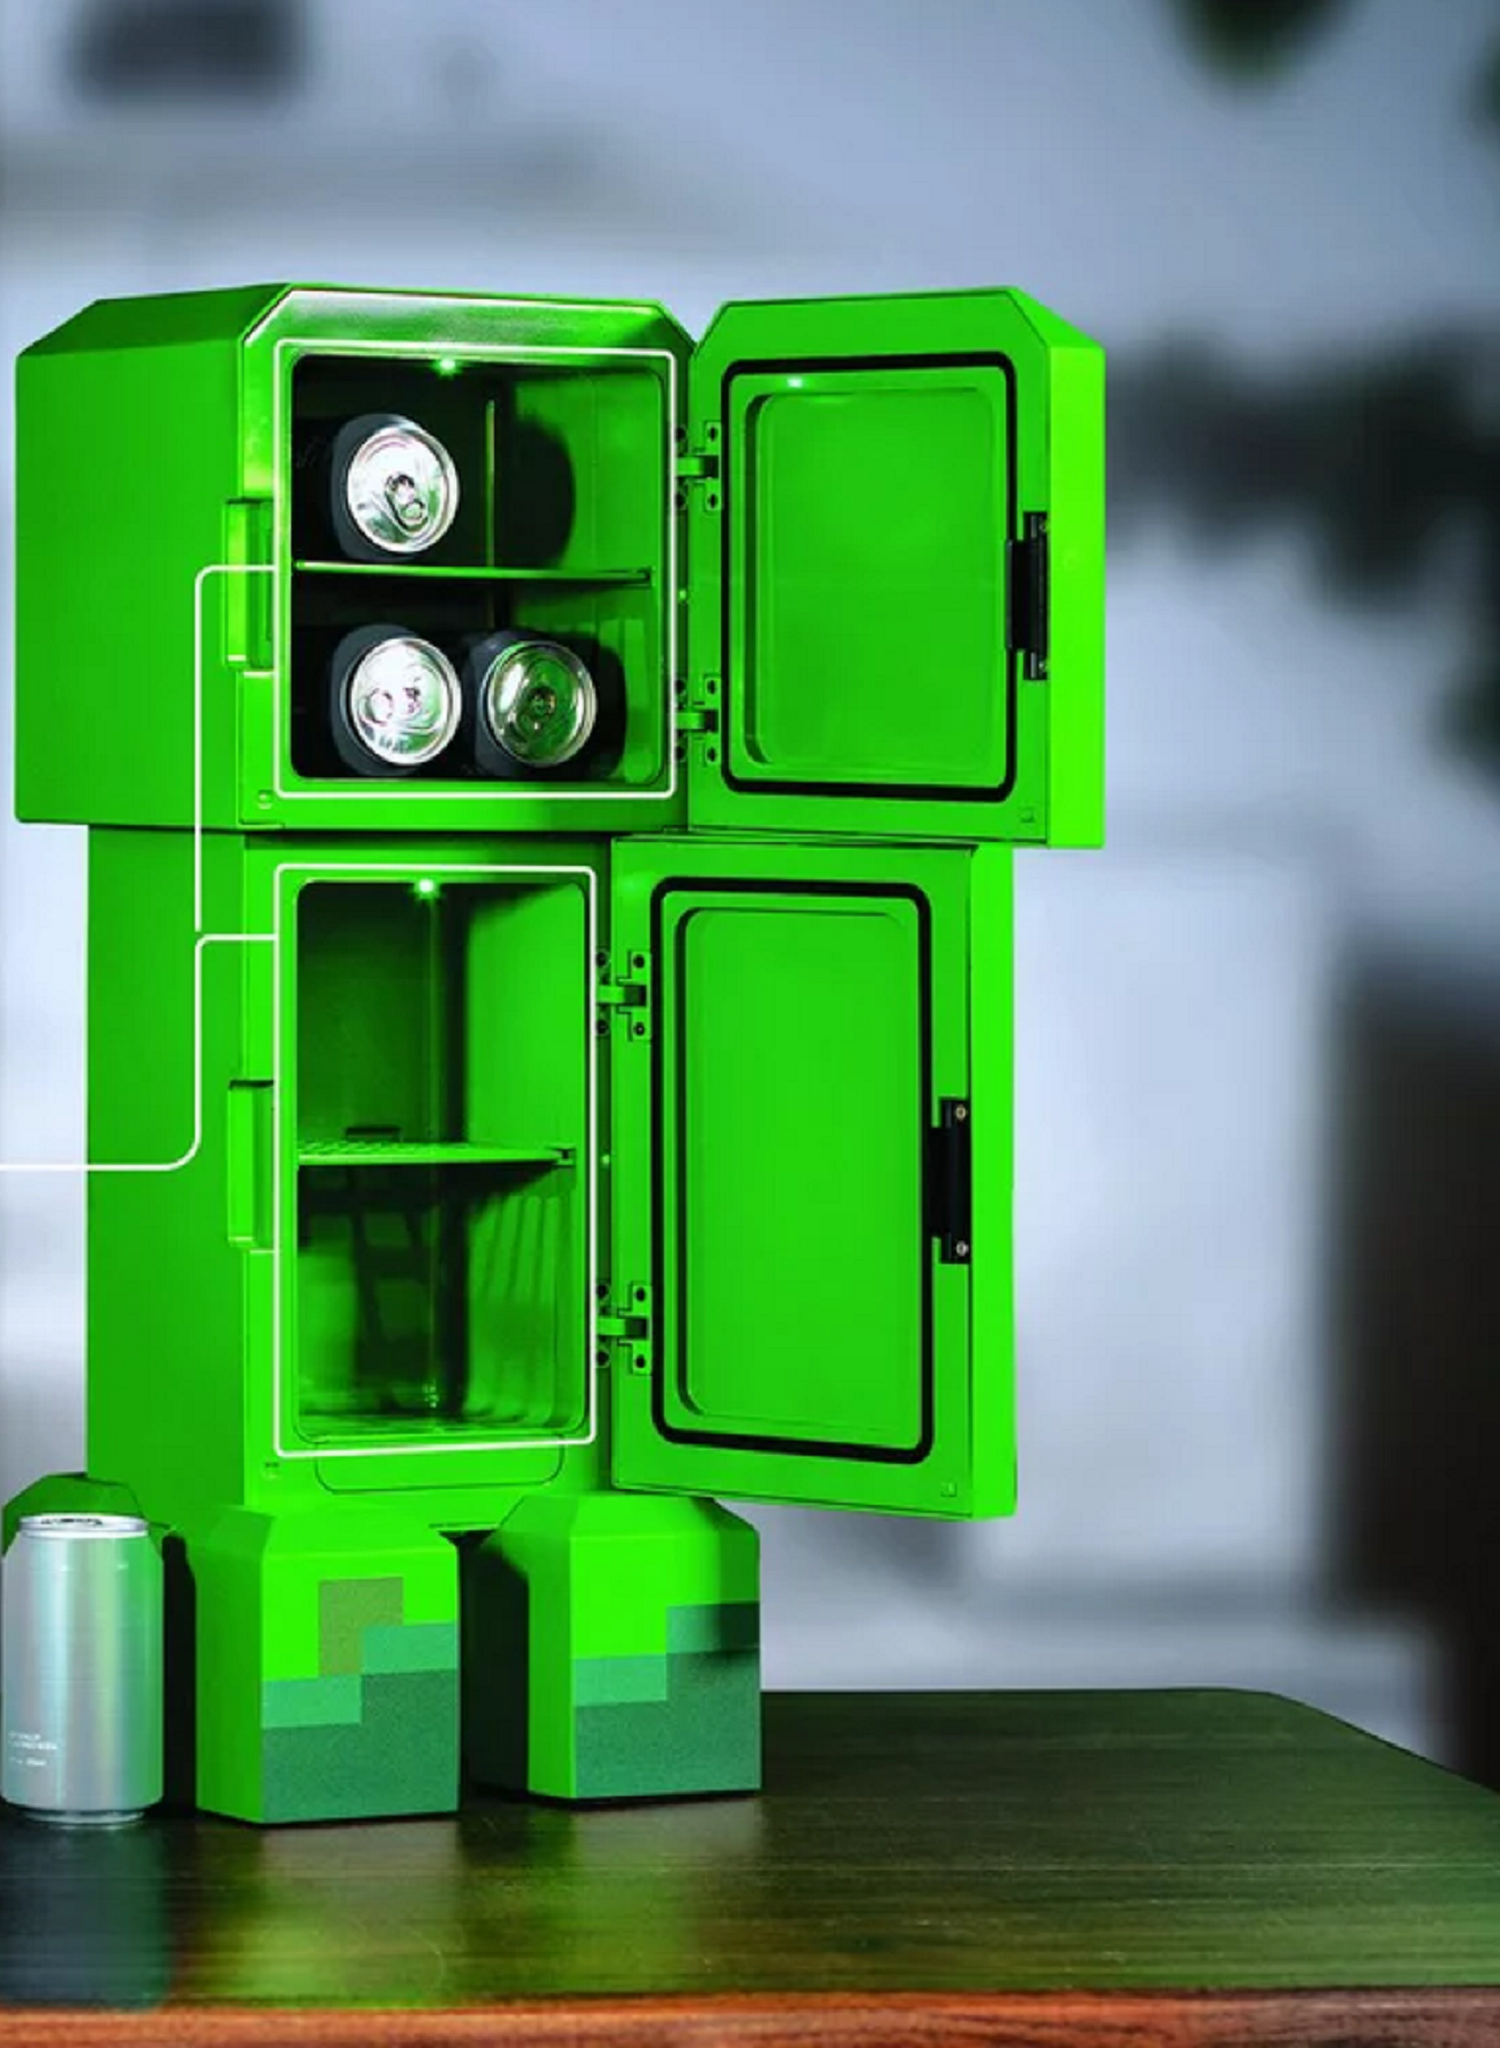 Minecraft Green Creeper Body 12 Can Mini Fridge 8L 2 Door Ambient Lighting 25.2" H 9.5" W 9.1" D - image 3 of 4